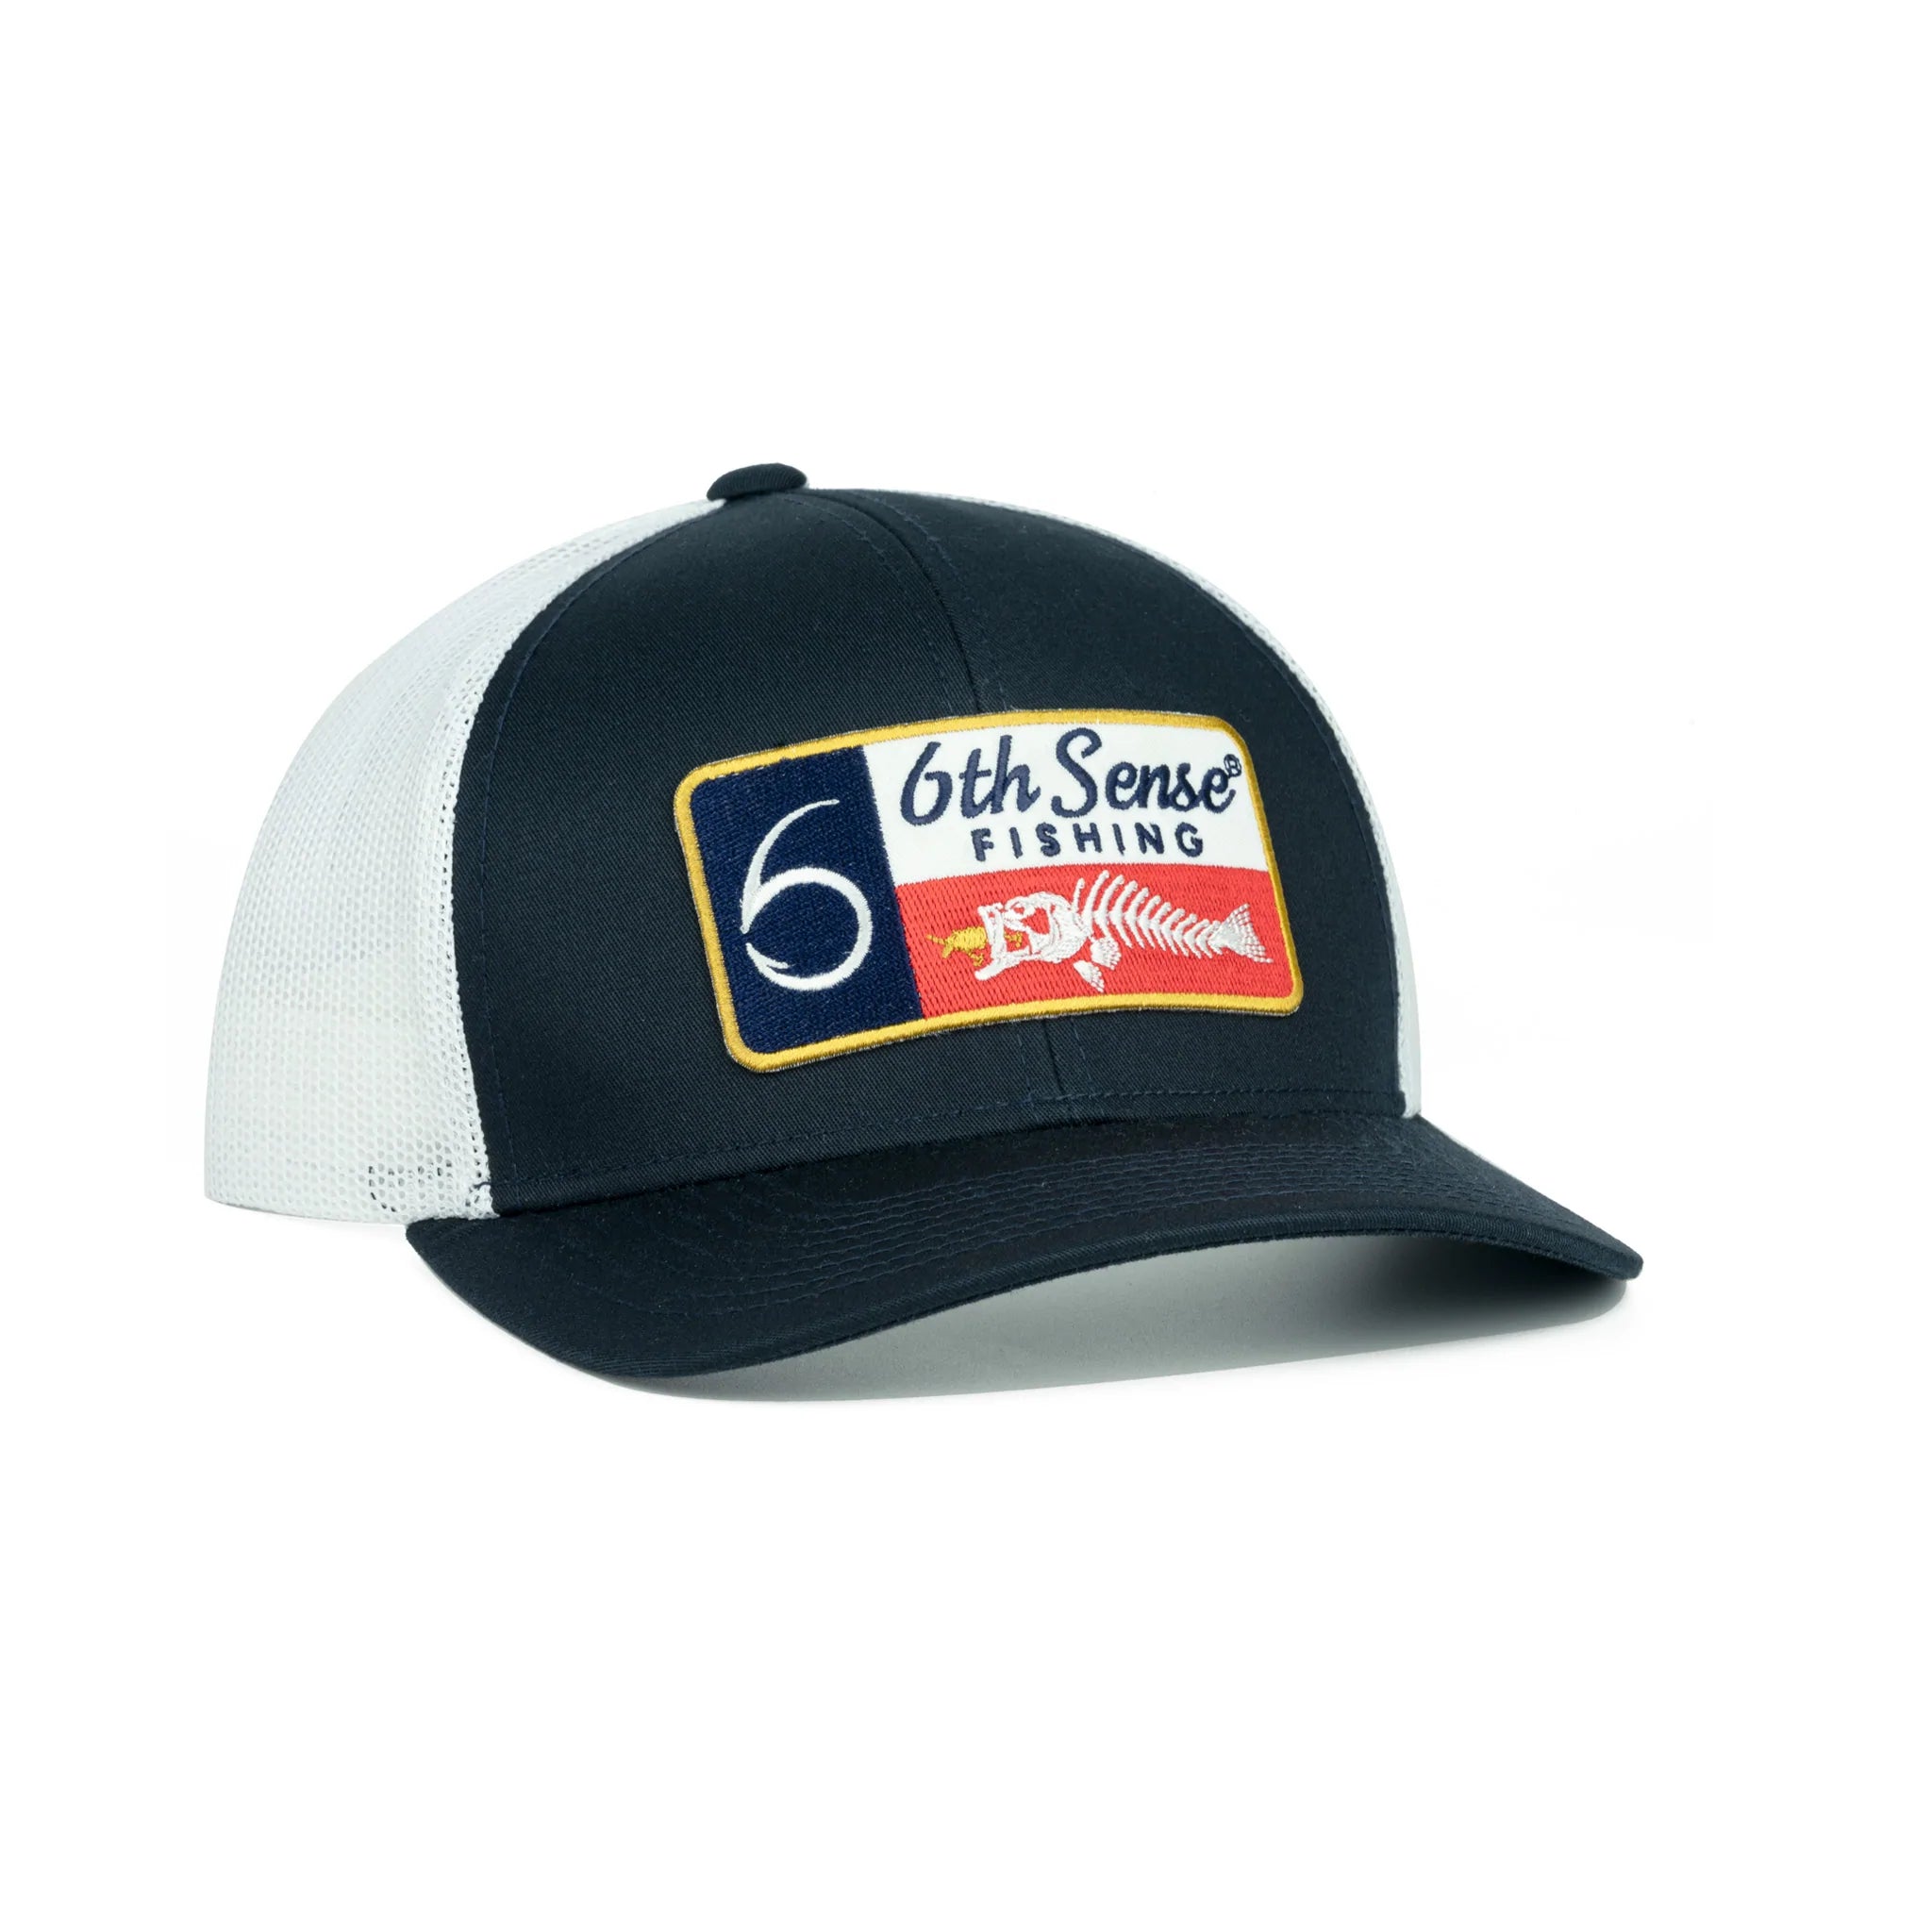 Buy texas-fishbones-navy-white 6TH SENSE HATS